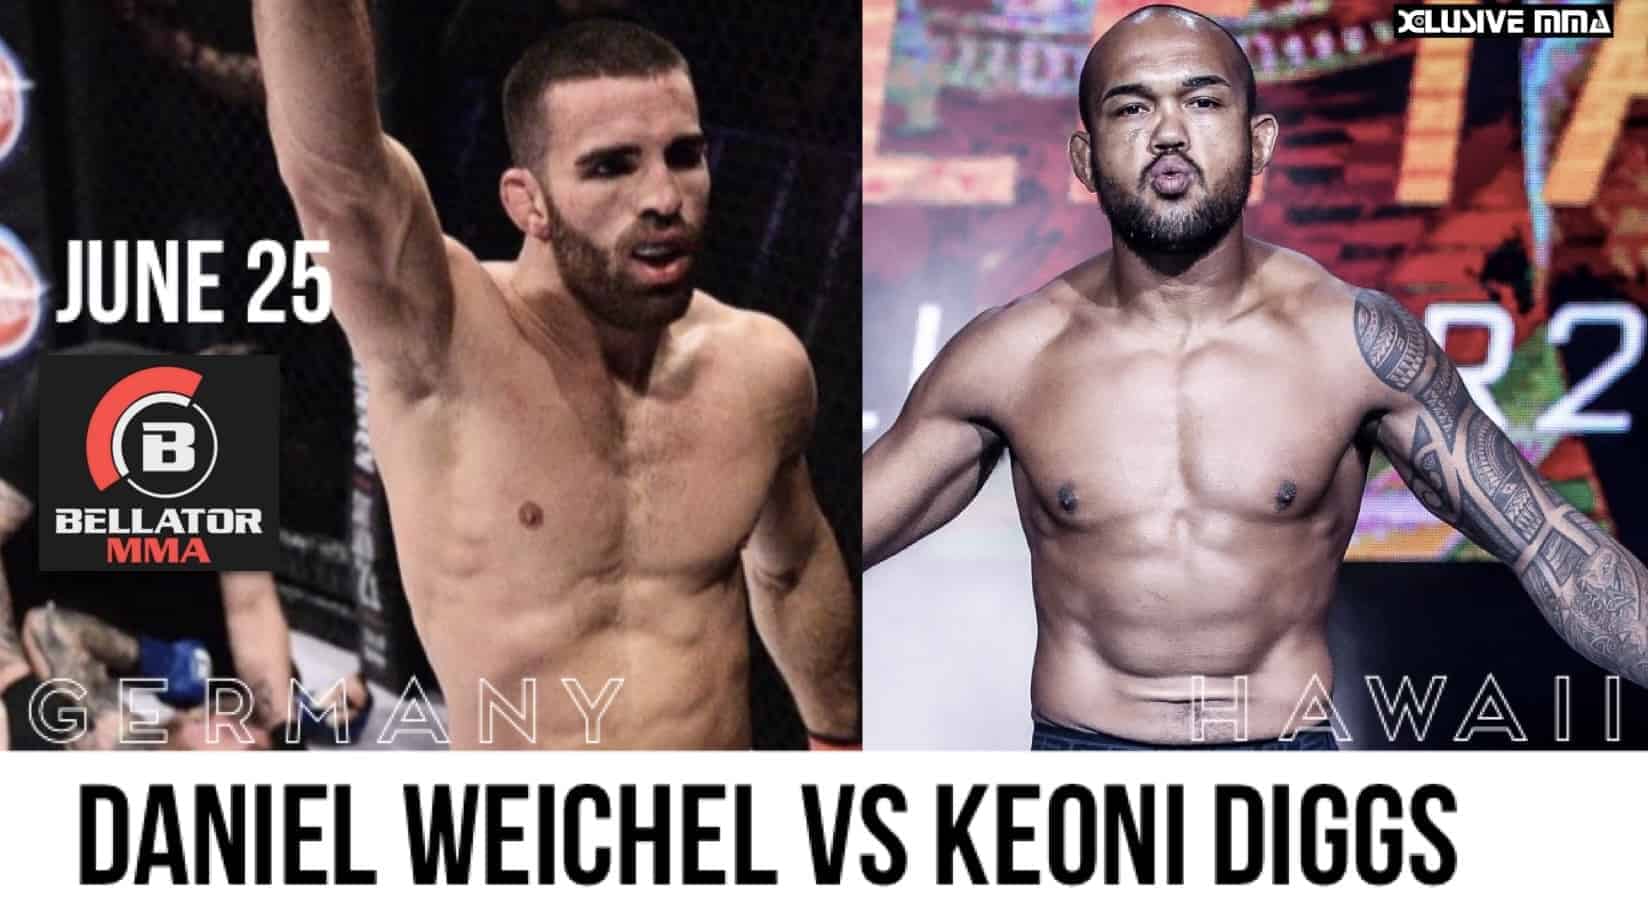 Keoni Diggs vs Daniel Weichel